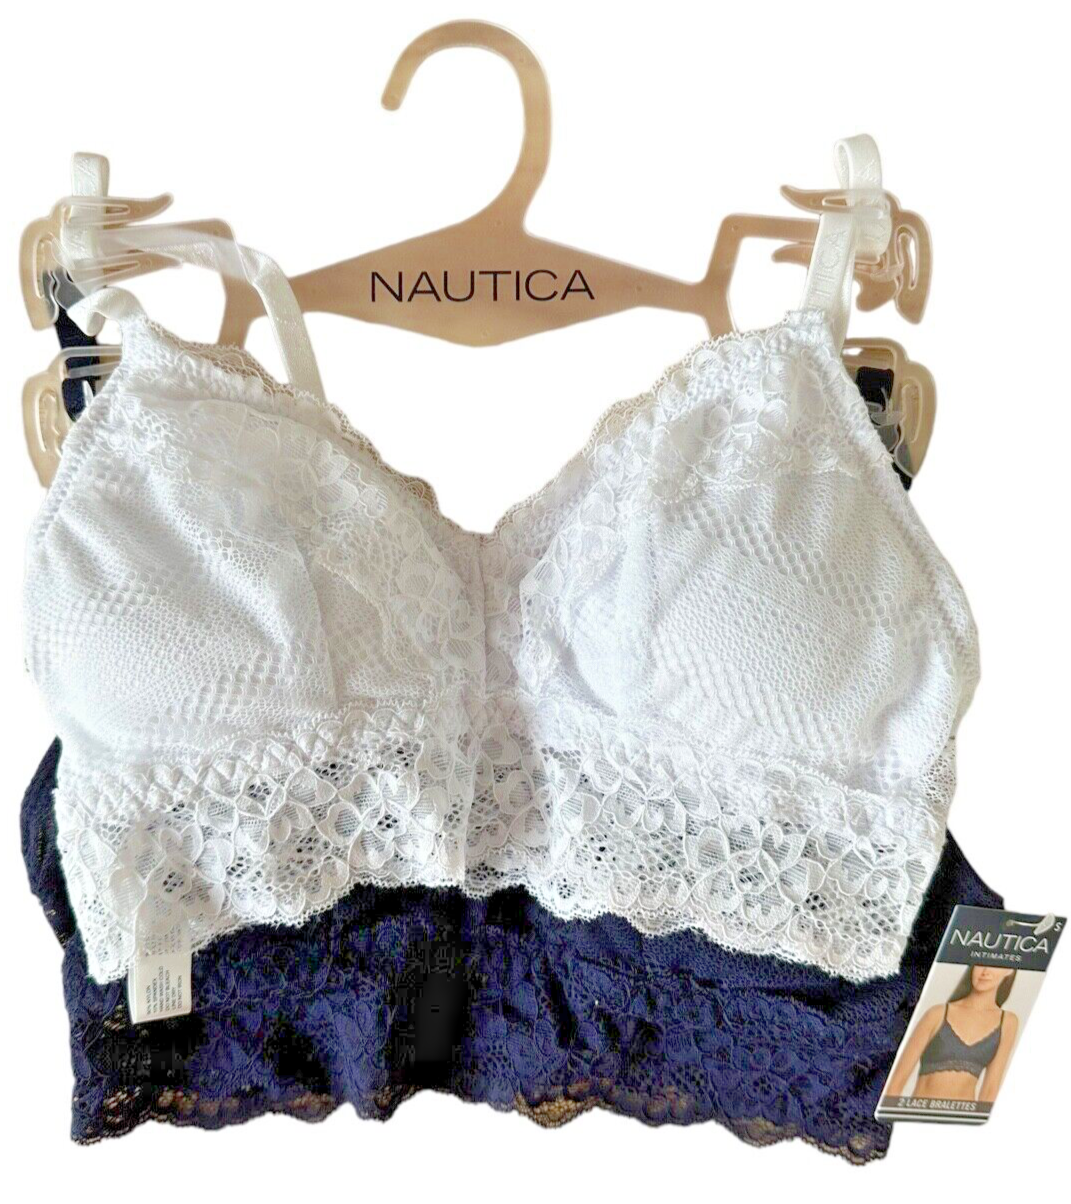 Nautica, Intimates & Sleepwear, 2 Nautica Intimates Front Closure Bras  Size 36c